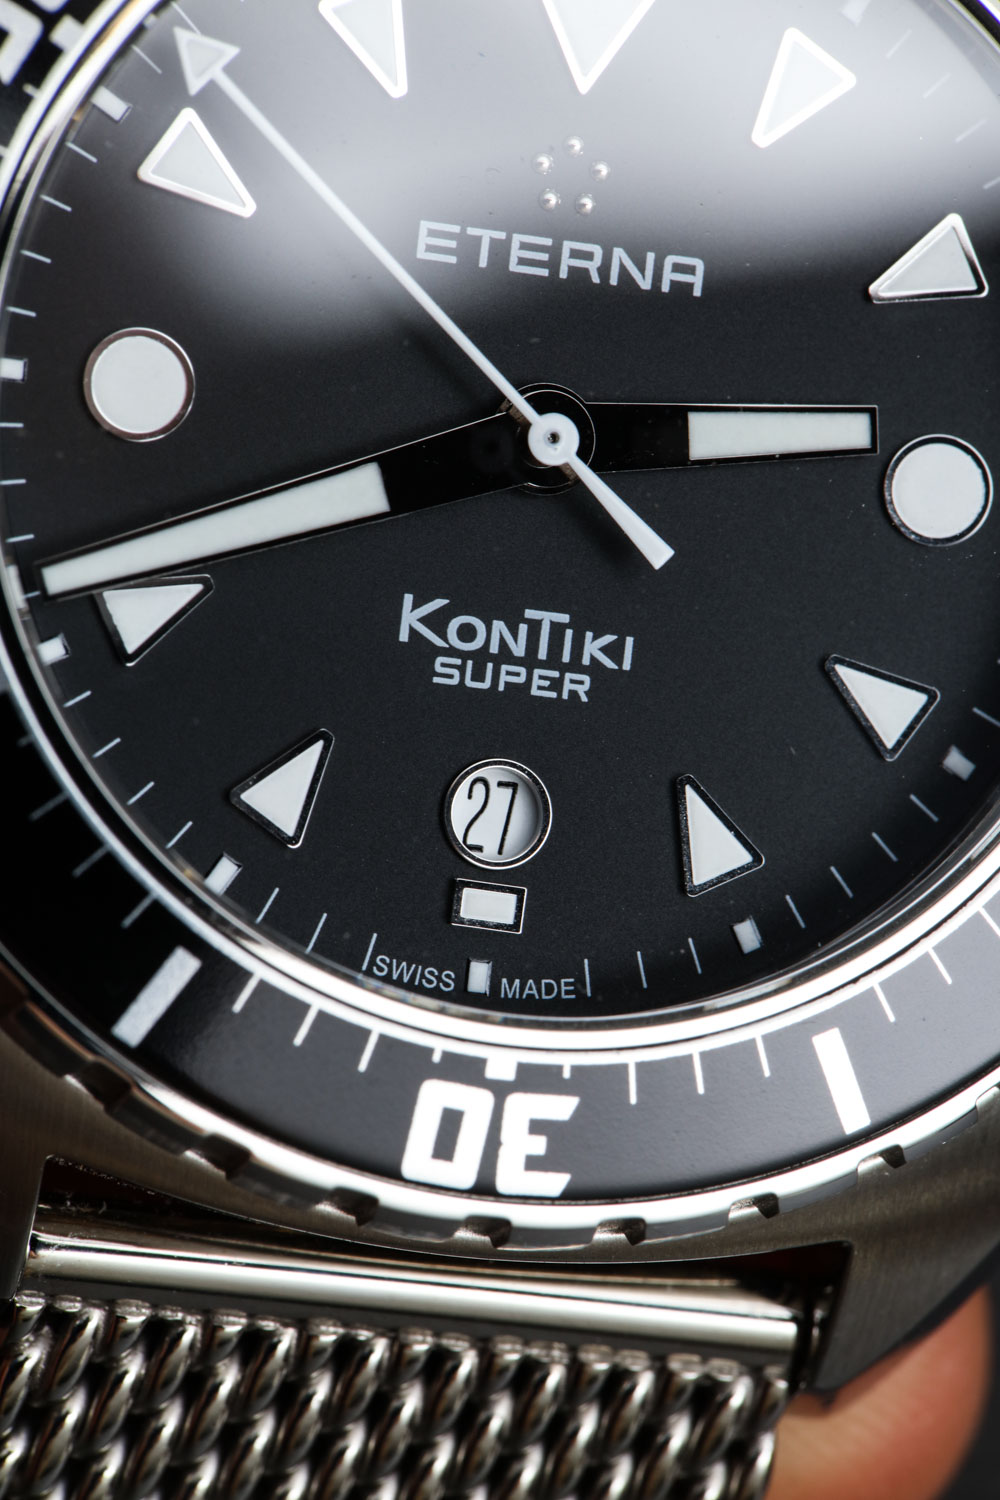 Eterna Super KonTiki Date Watch Review Wrist Time Reviews 